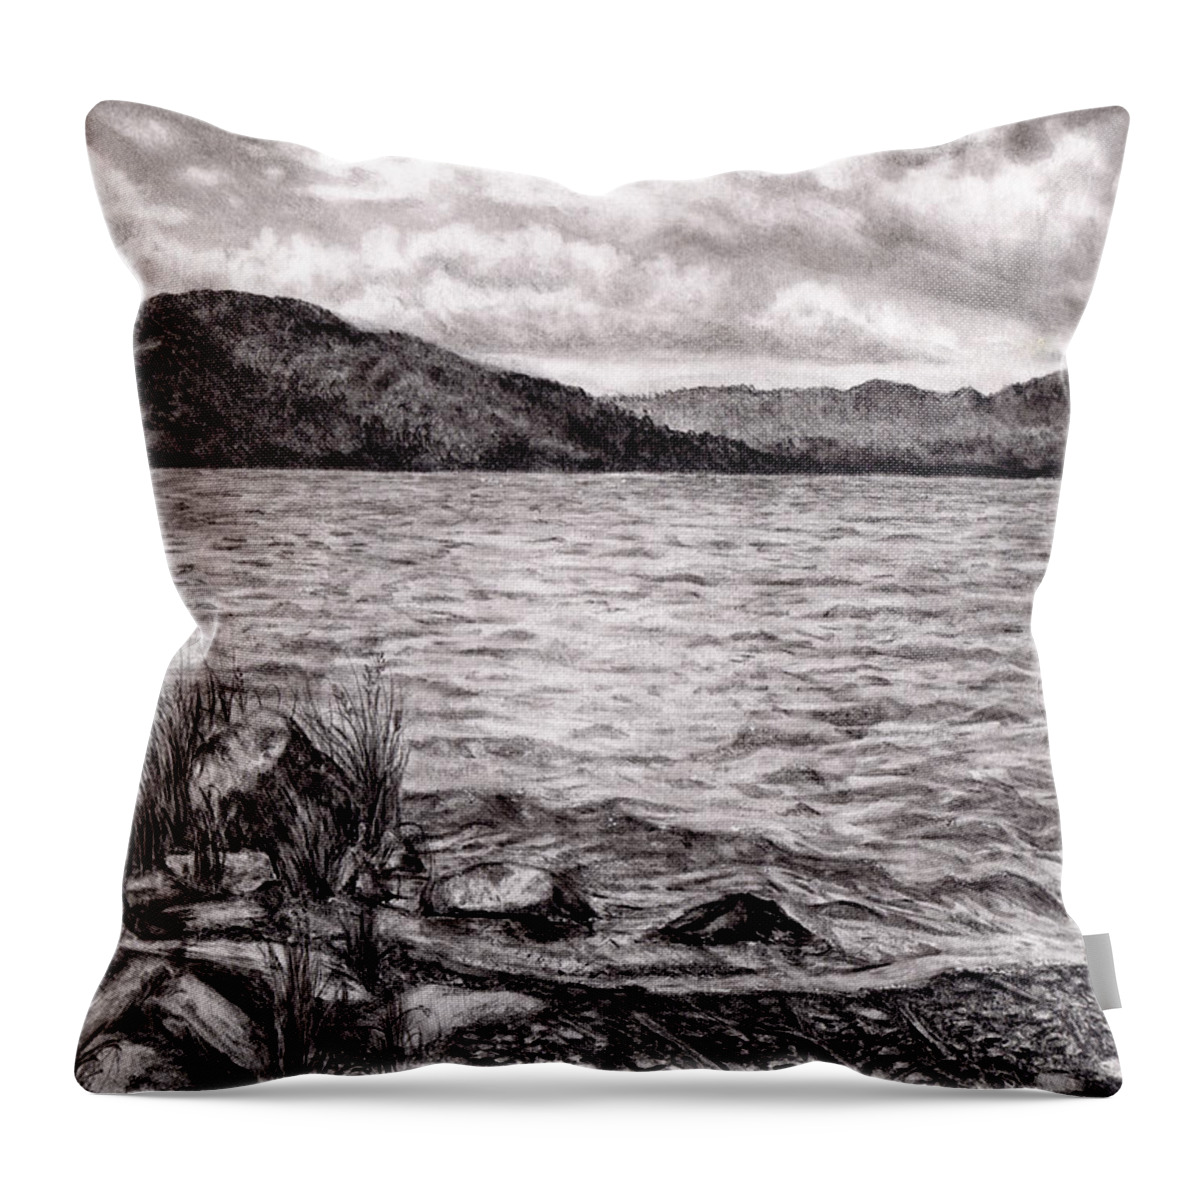 Lake Throw Pillow featuring the drawing Big Wood Lake by Shana Rowe Jackson